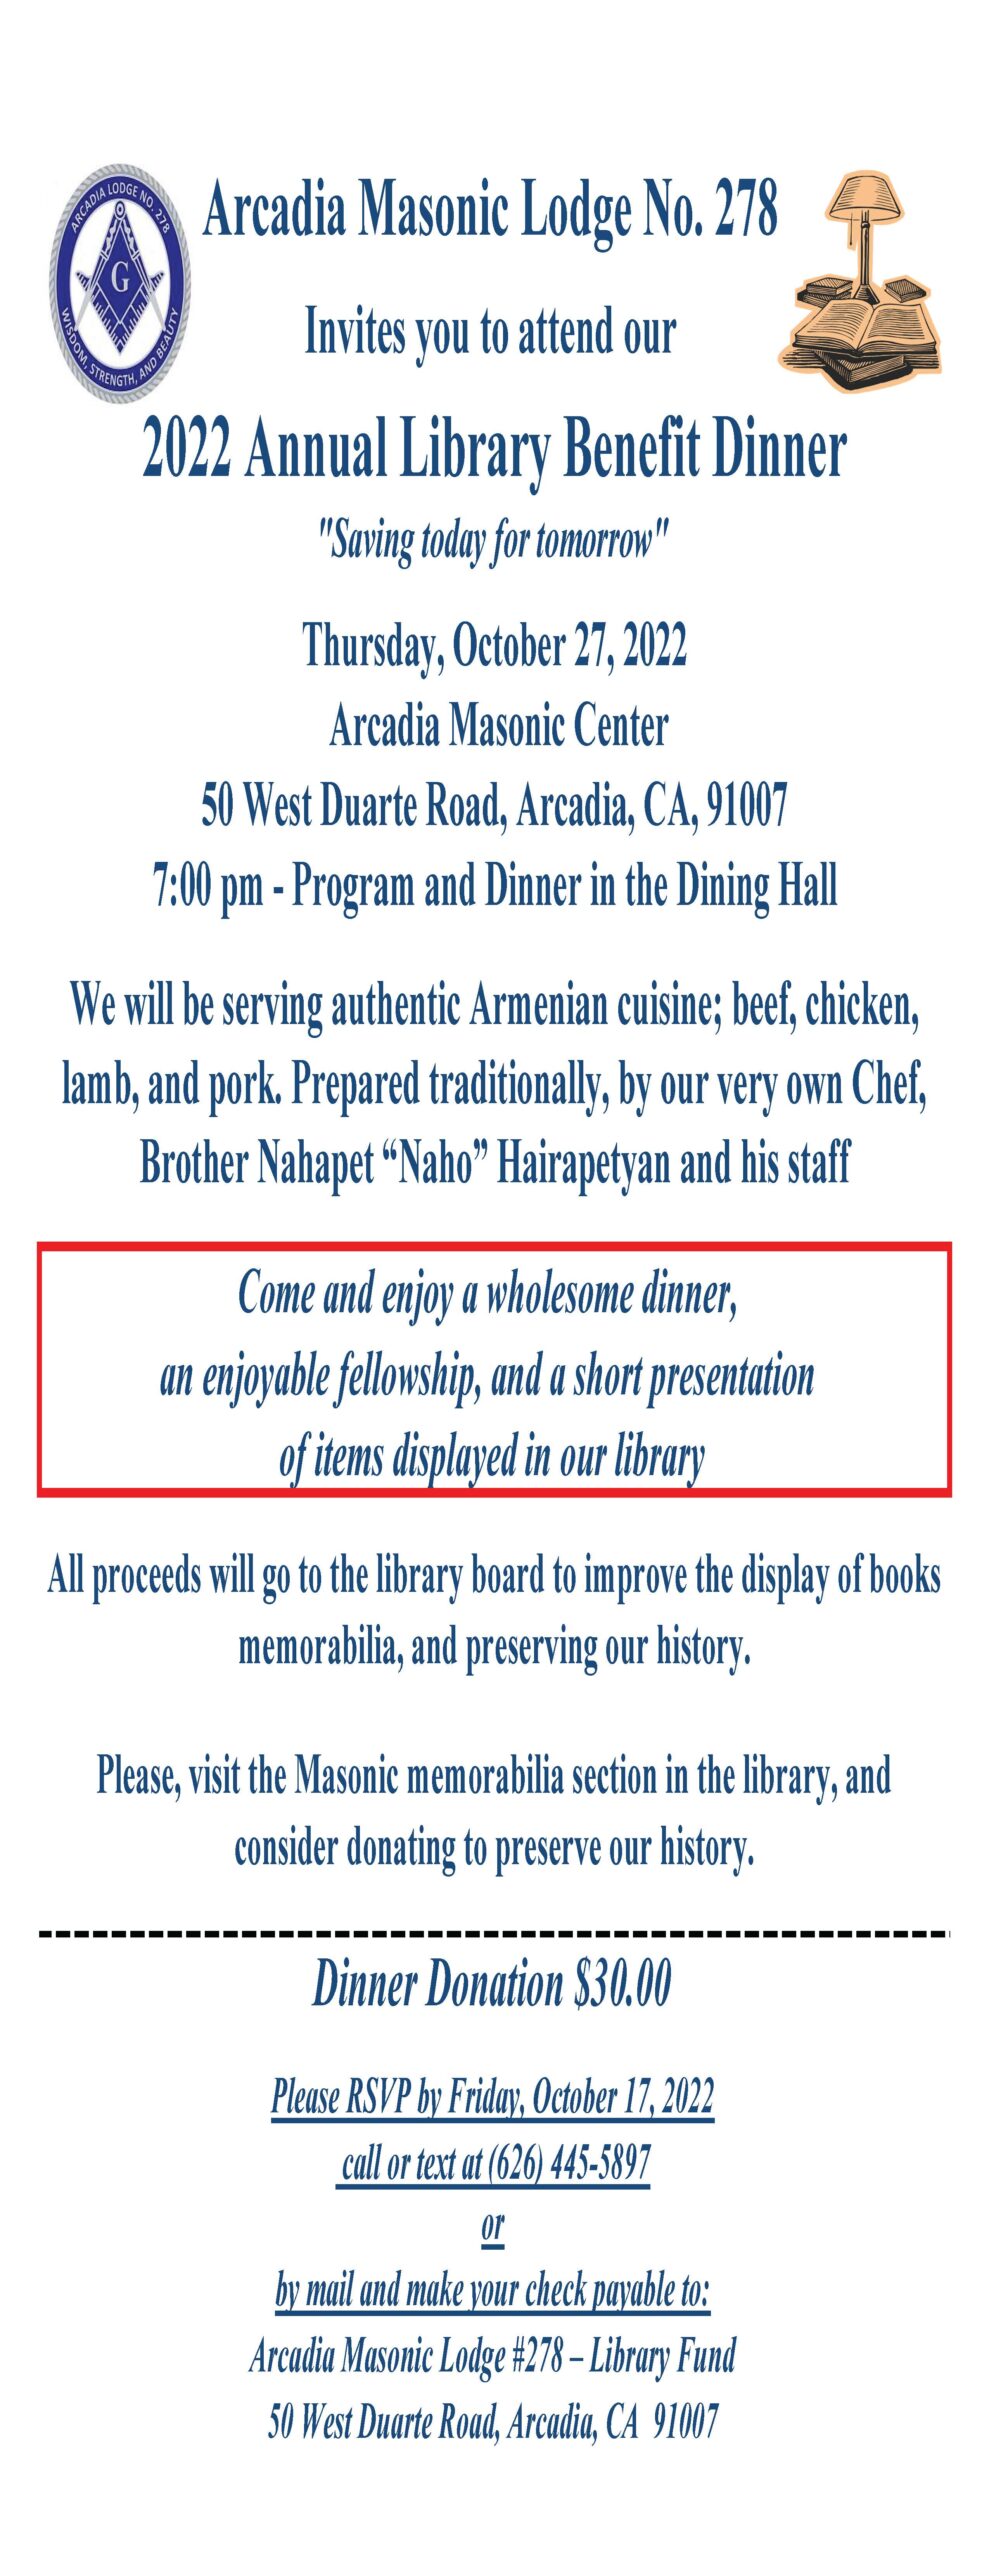 Masonic Lodge Annual Dinner for Oct 27